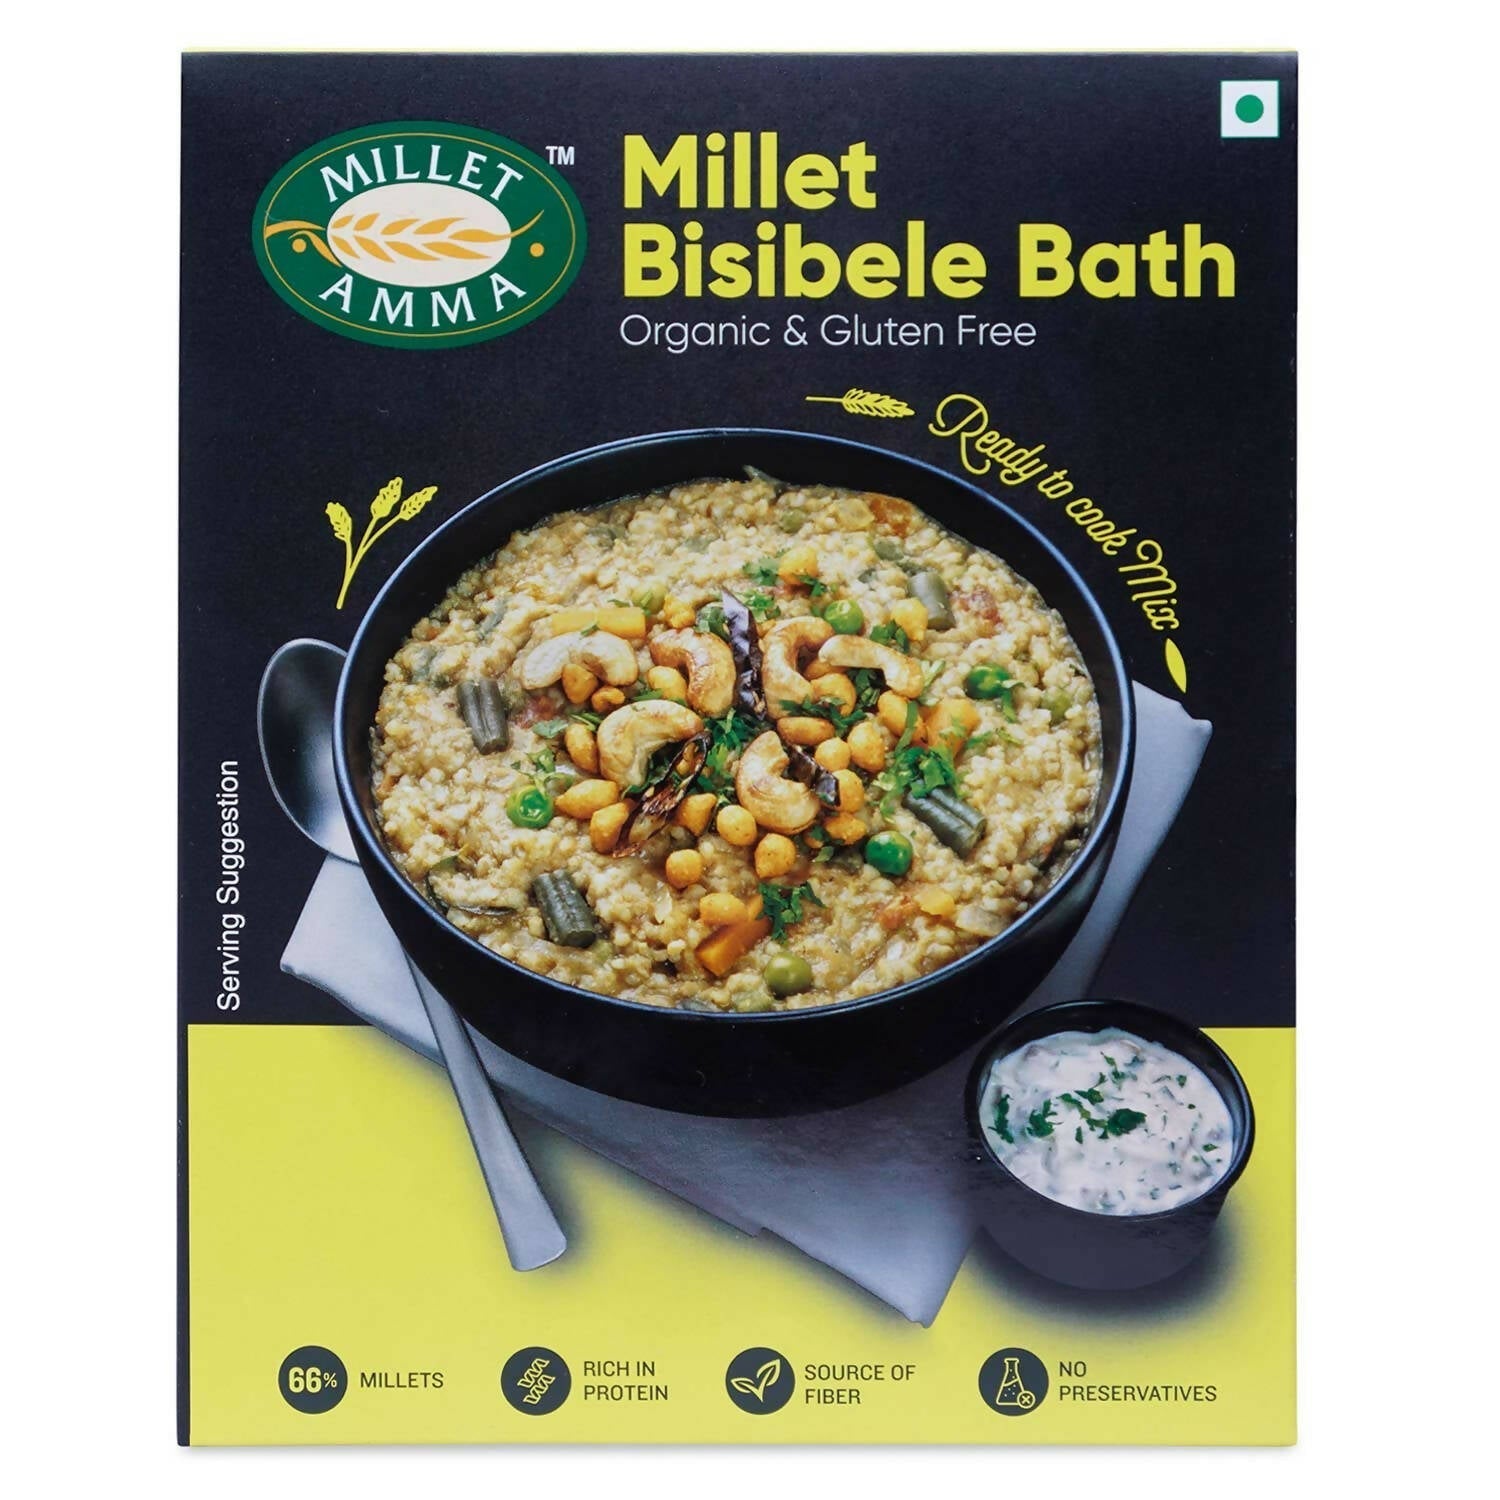 Millet Amma Organic Millet Bisibele Bath Mix - buy in USA, Australia, Canada